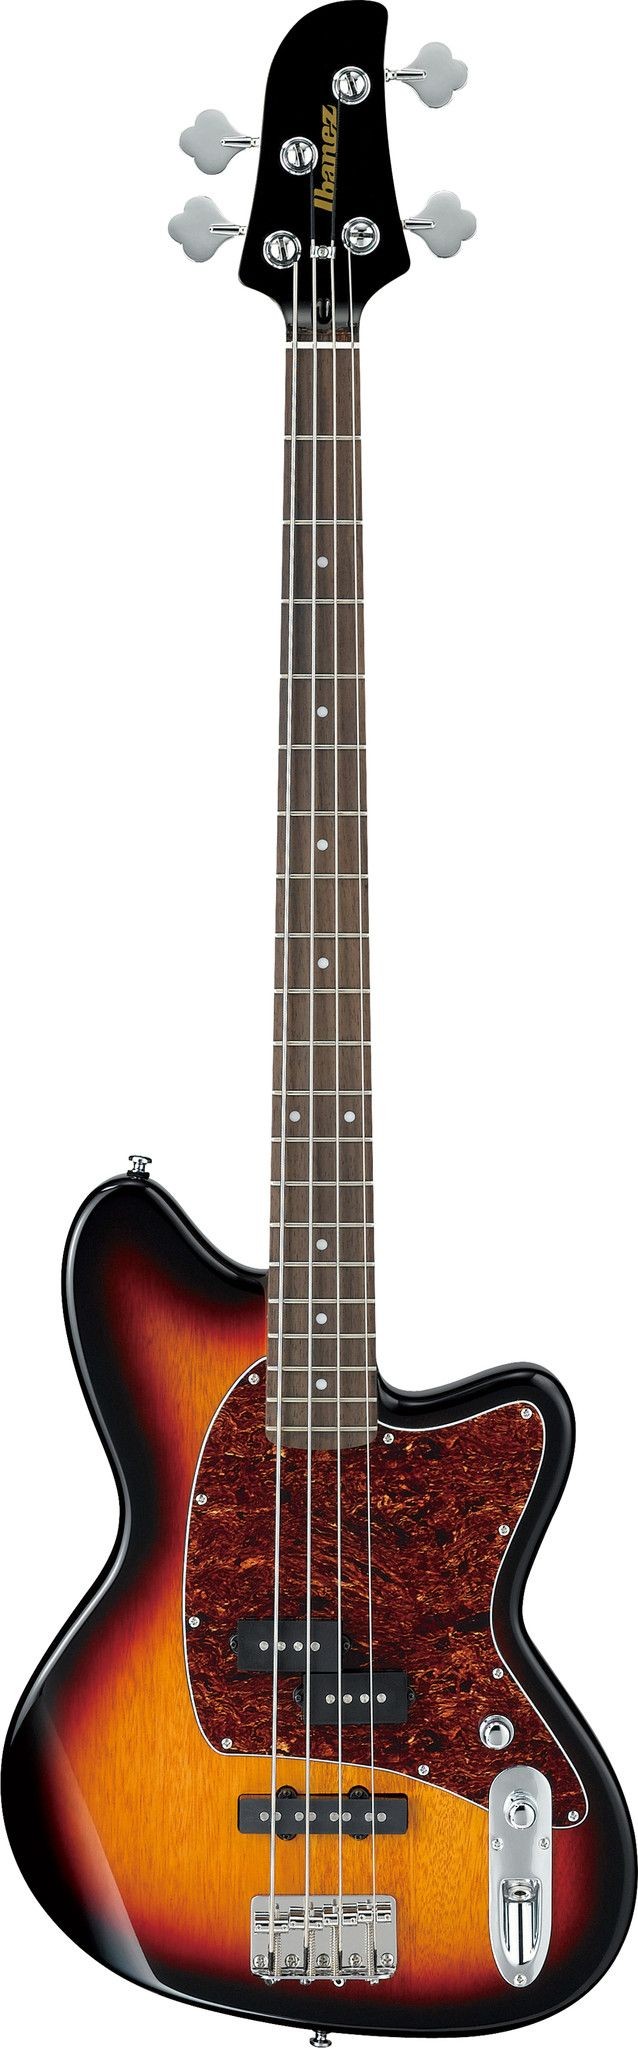 Ibanez TMB100 Talman Series Bass Guitar